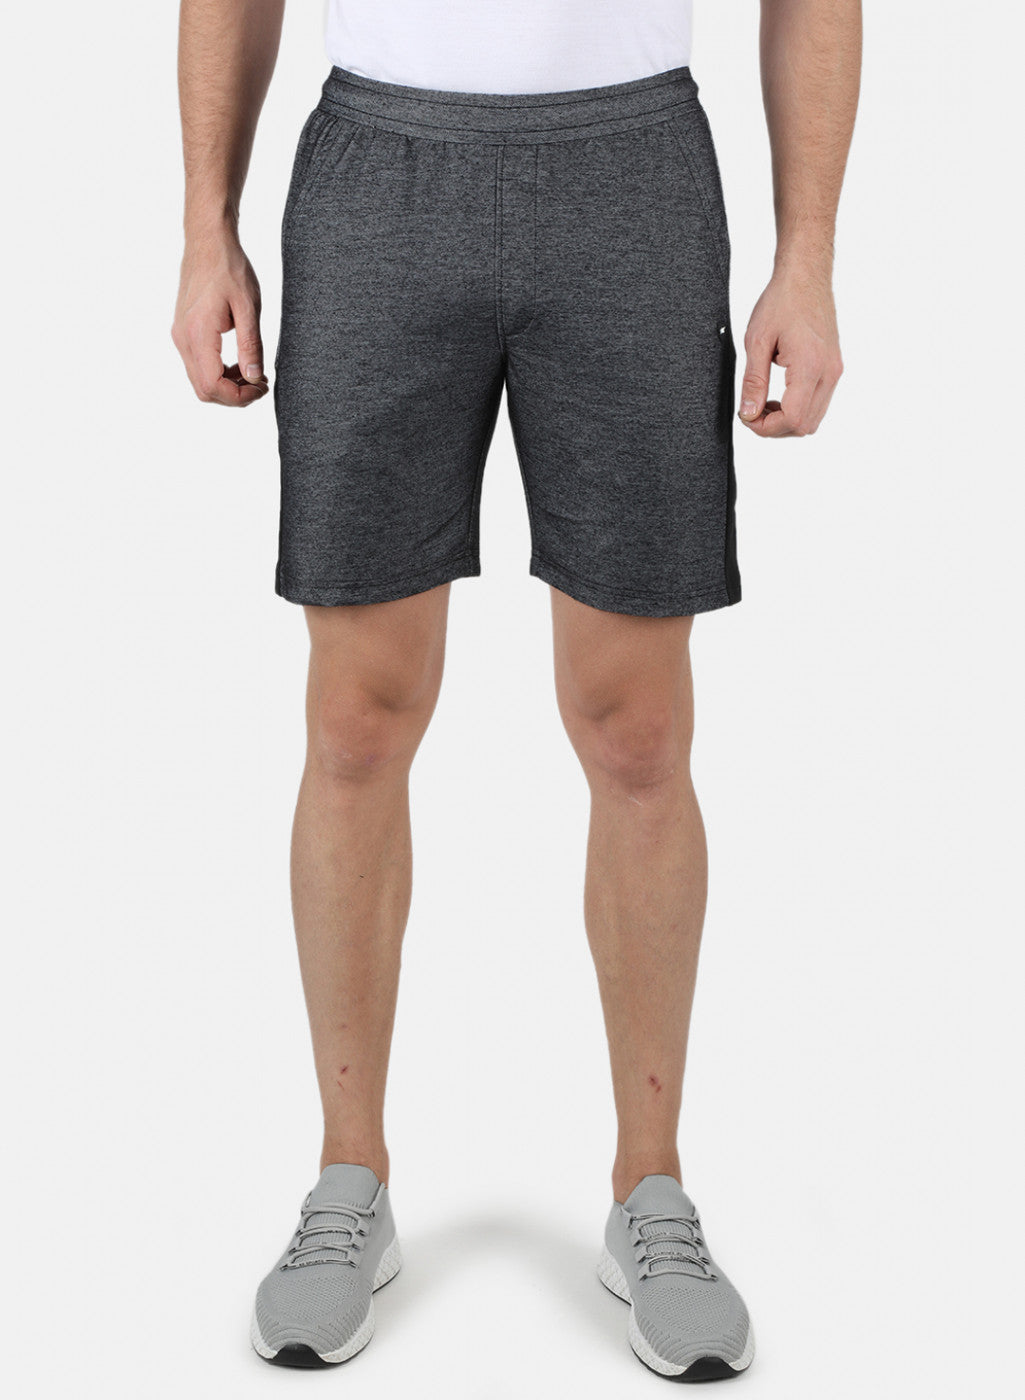 Buy Shorts for Men Online - Mens Cotton Shorts - Monte Carlo